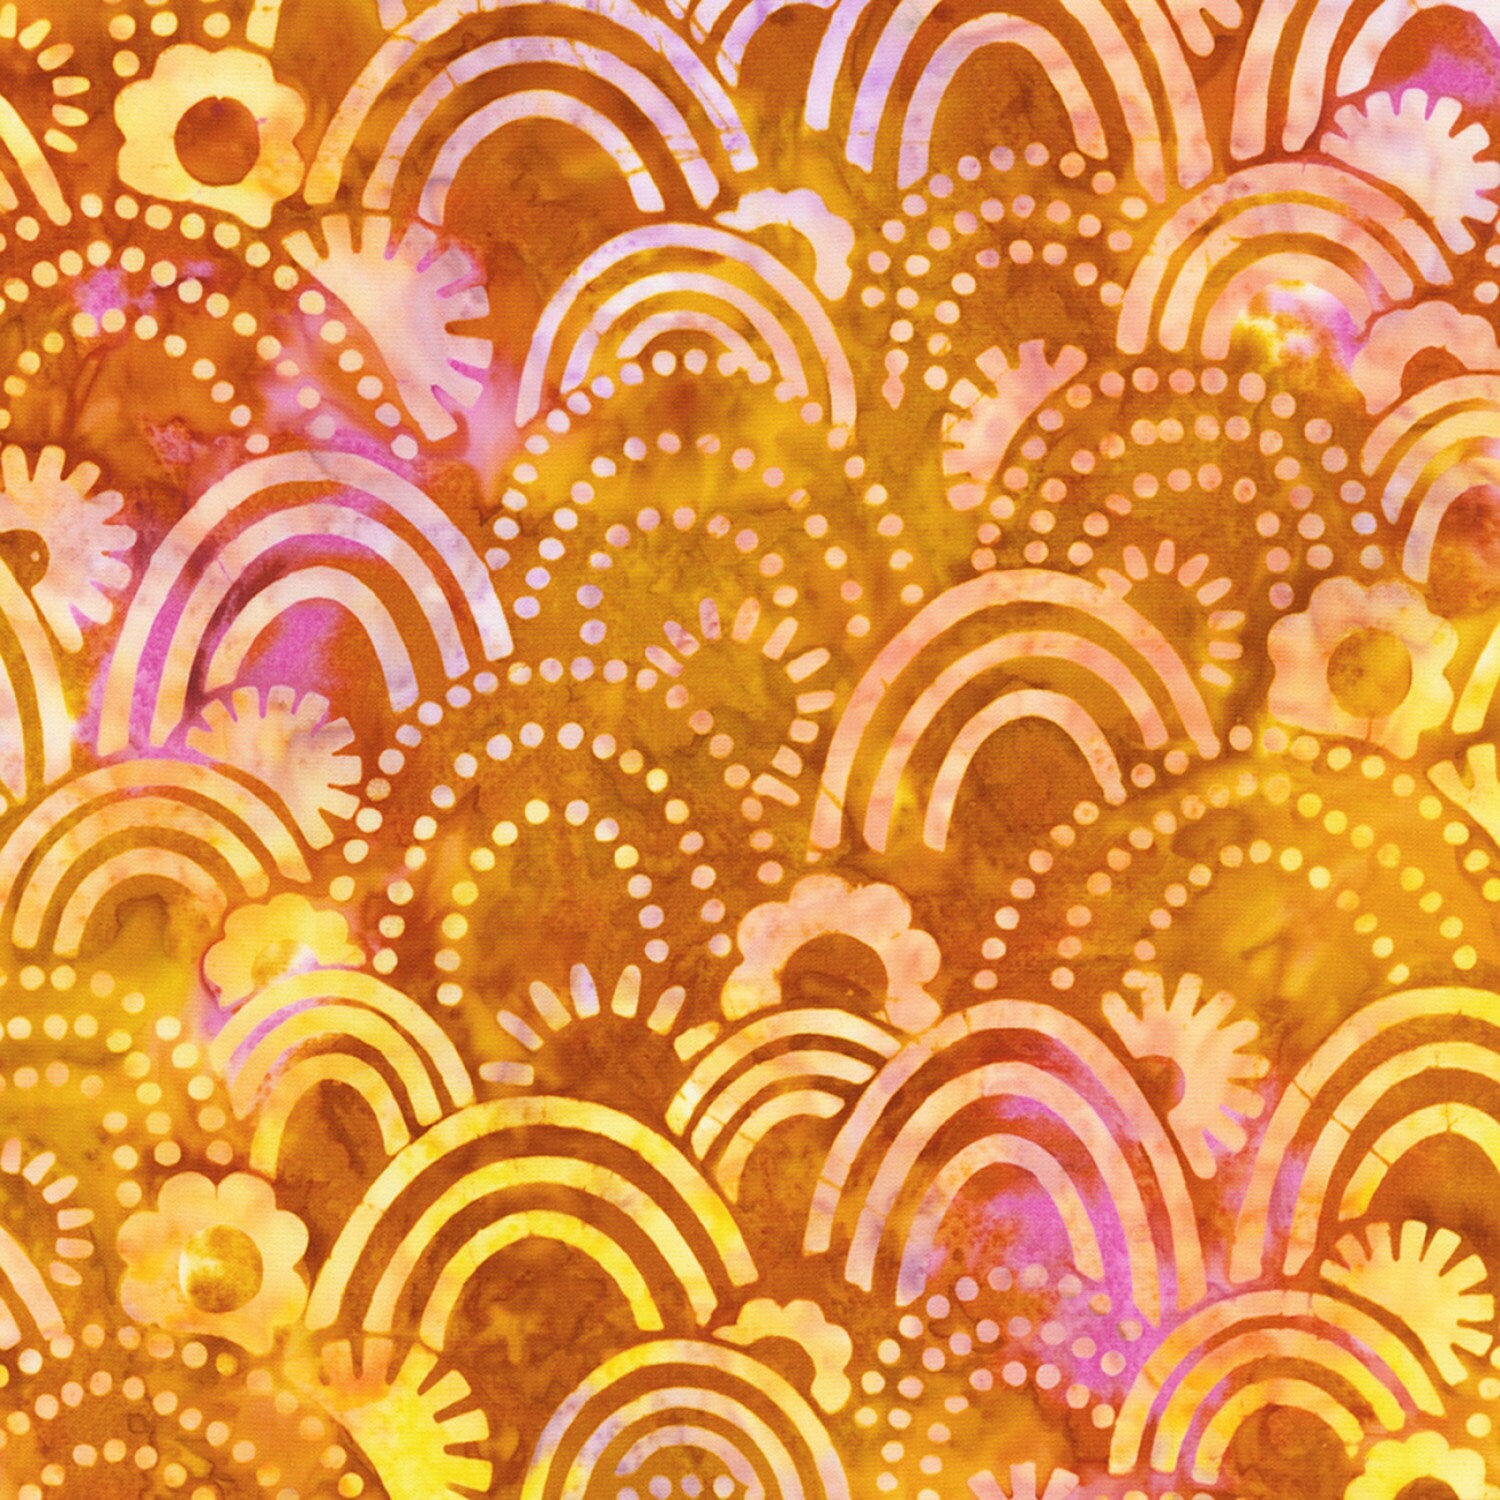 Artisan Batiks Retro Rainbow Roll Up, Robert Kaufman RU-1221-40, Teal Gold Pink Blue Batiks Jelly Roll Fabric, 2.5" Precut Fabric Strips